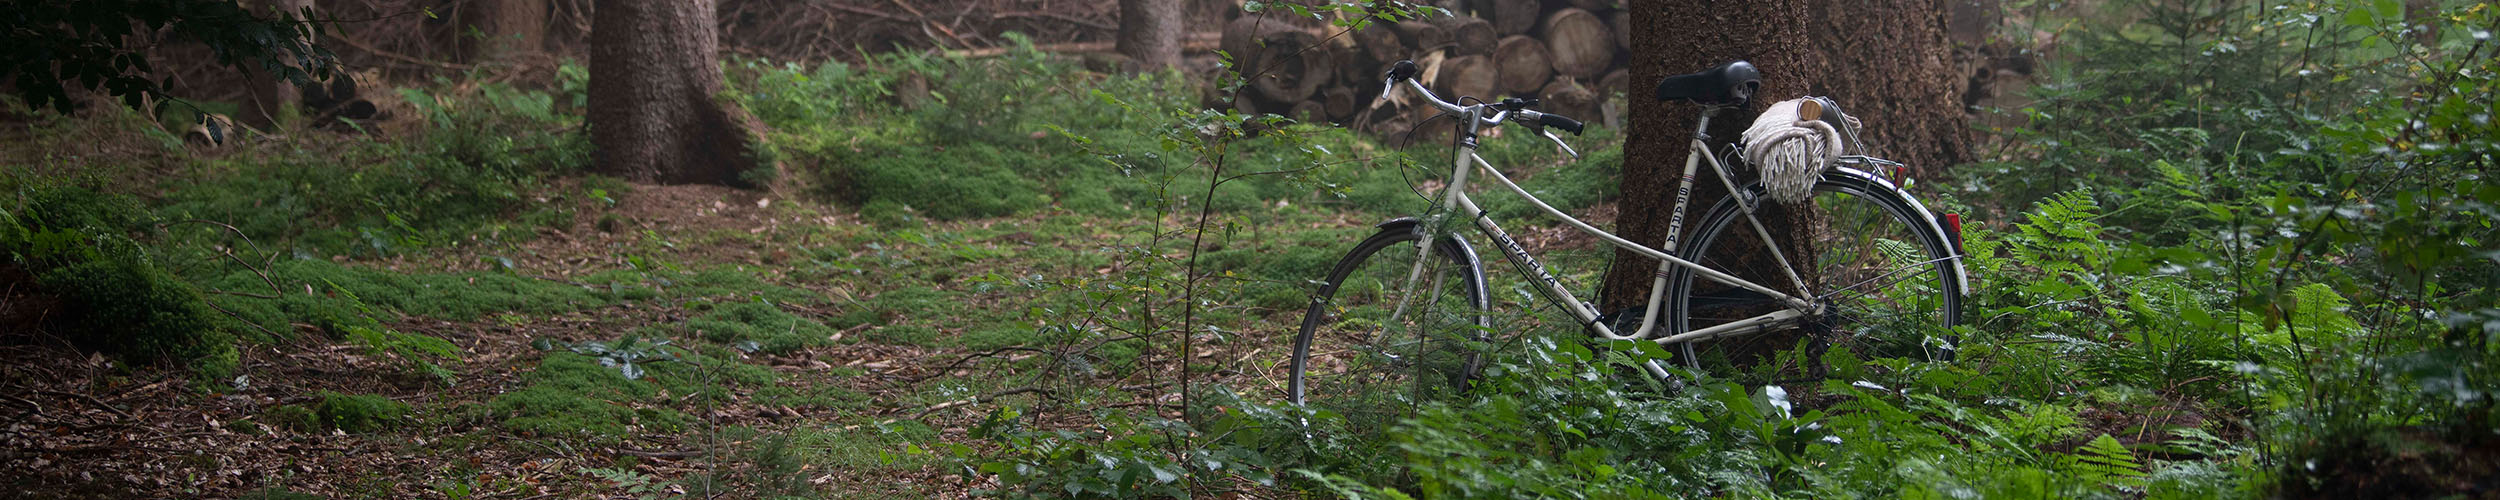 Fahrrad im Wald an Baum